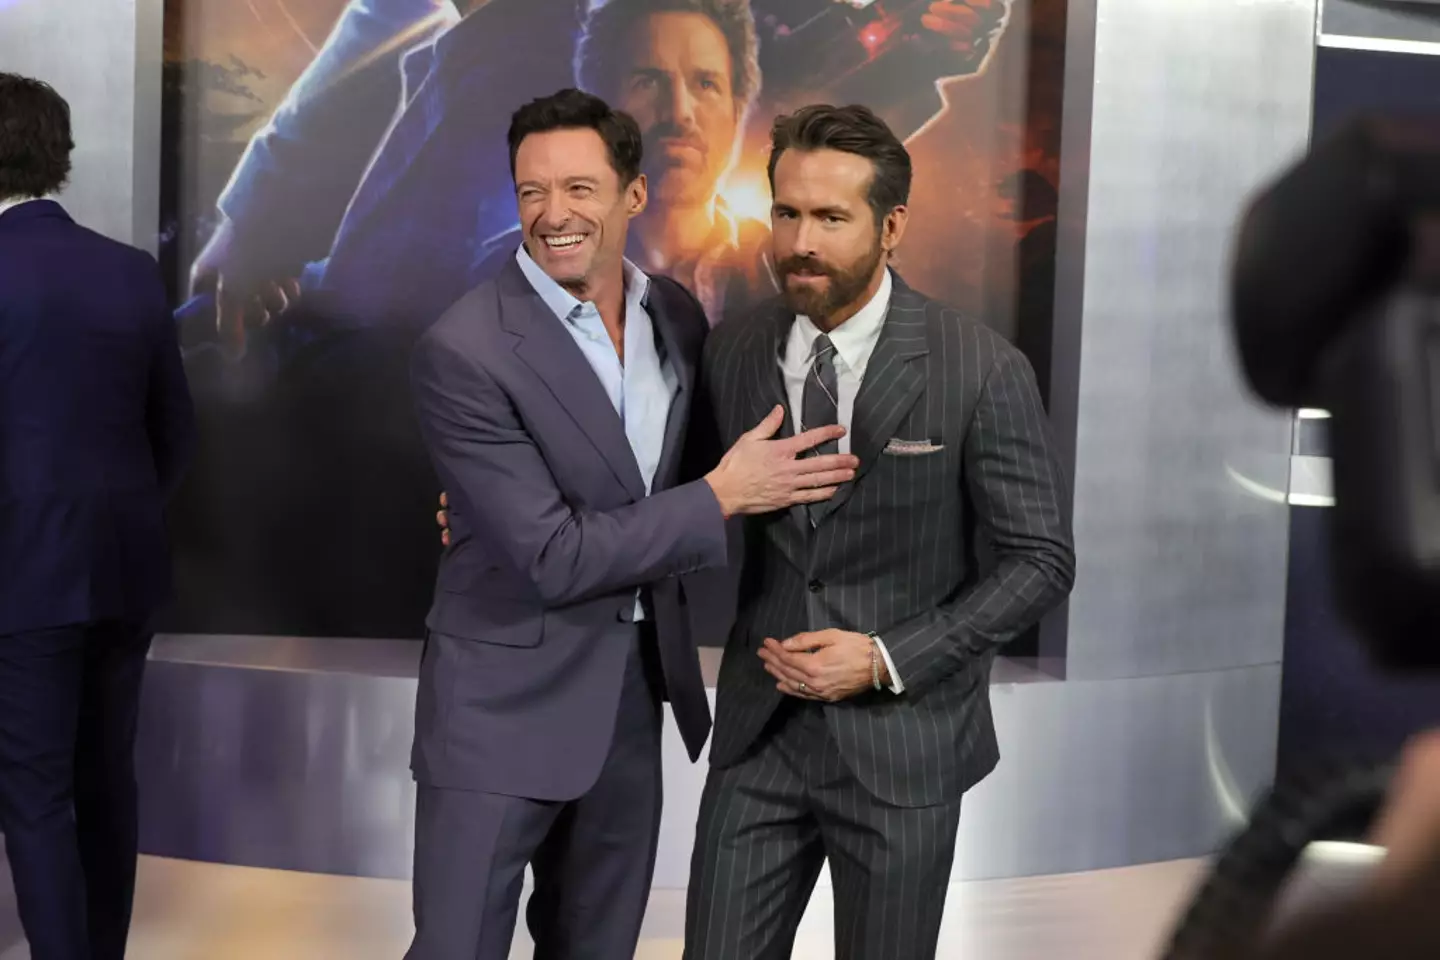 Hugh Jackman and Ryan Reynolds are known to be close off-camera. (Dia Dipasupil/FilmMagic)